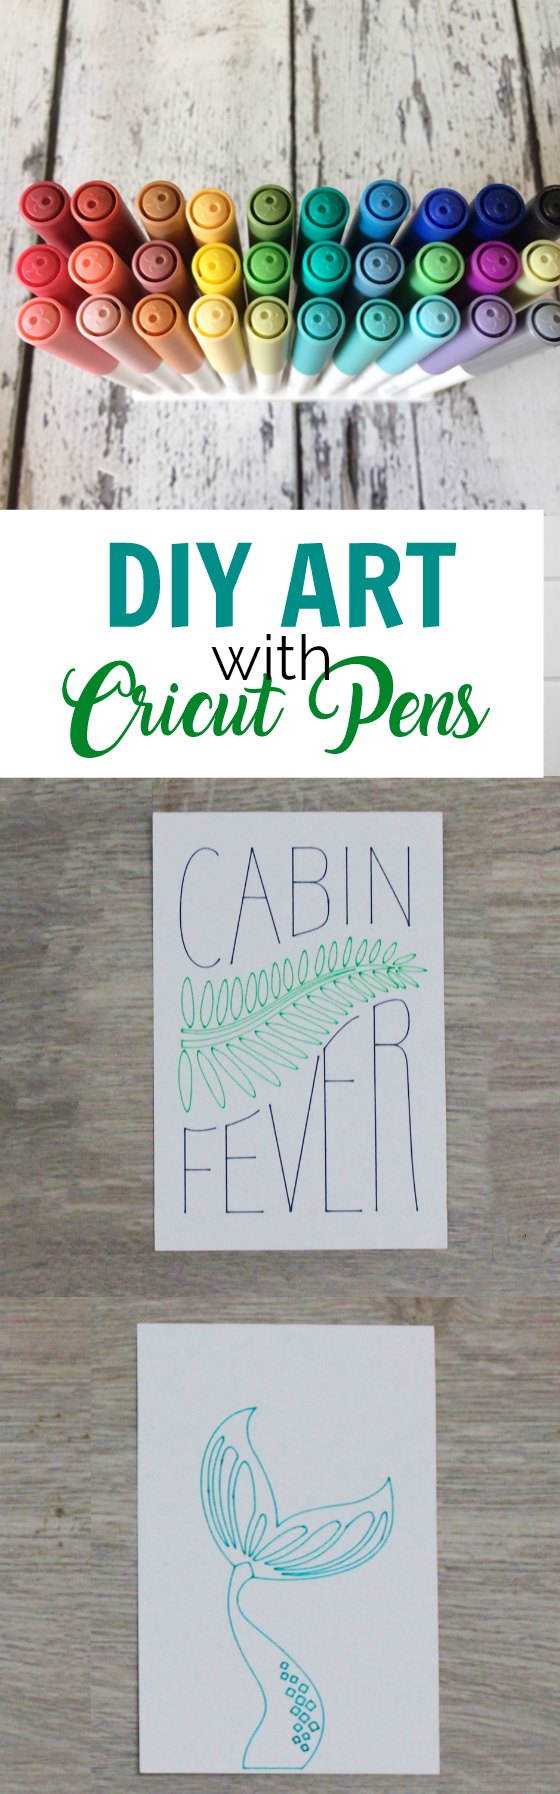 How to Use Cricut Pens (& Cricut Pen Projects)